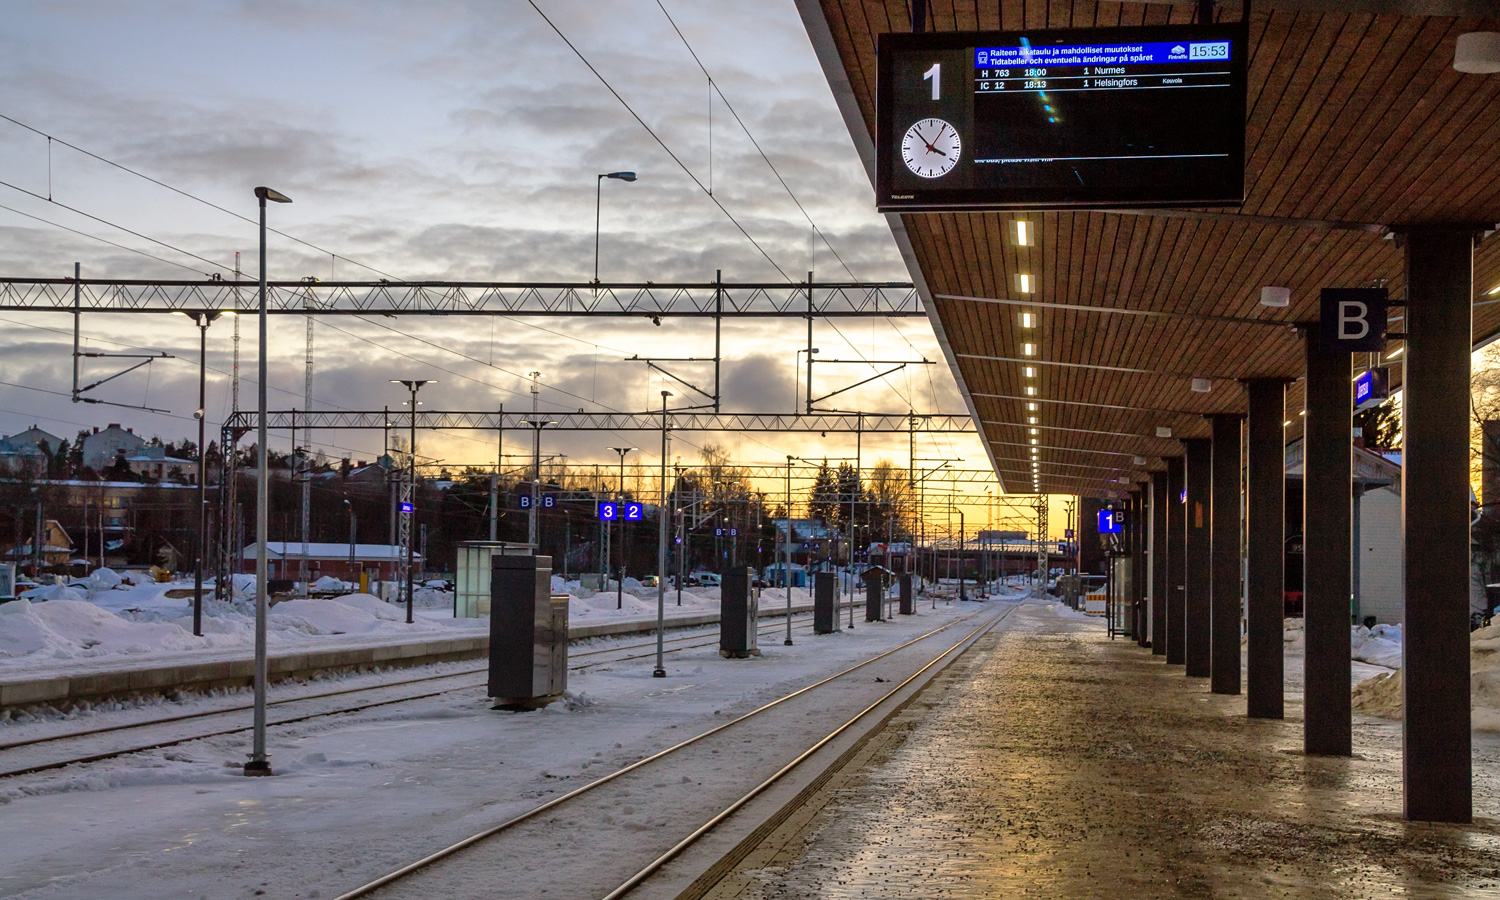 Finland railway — Stations & ways